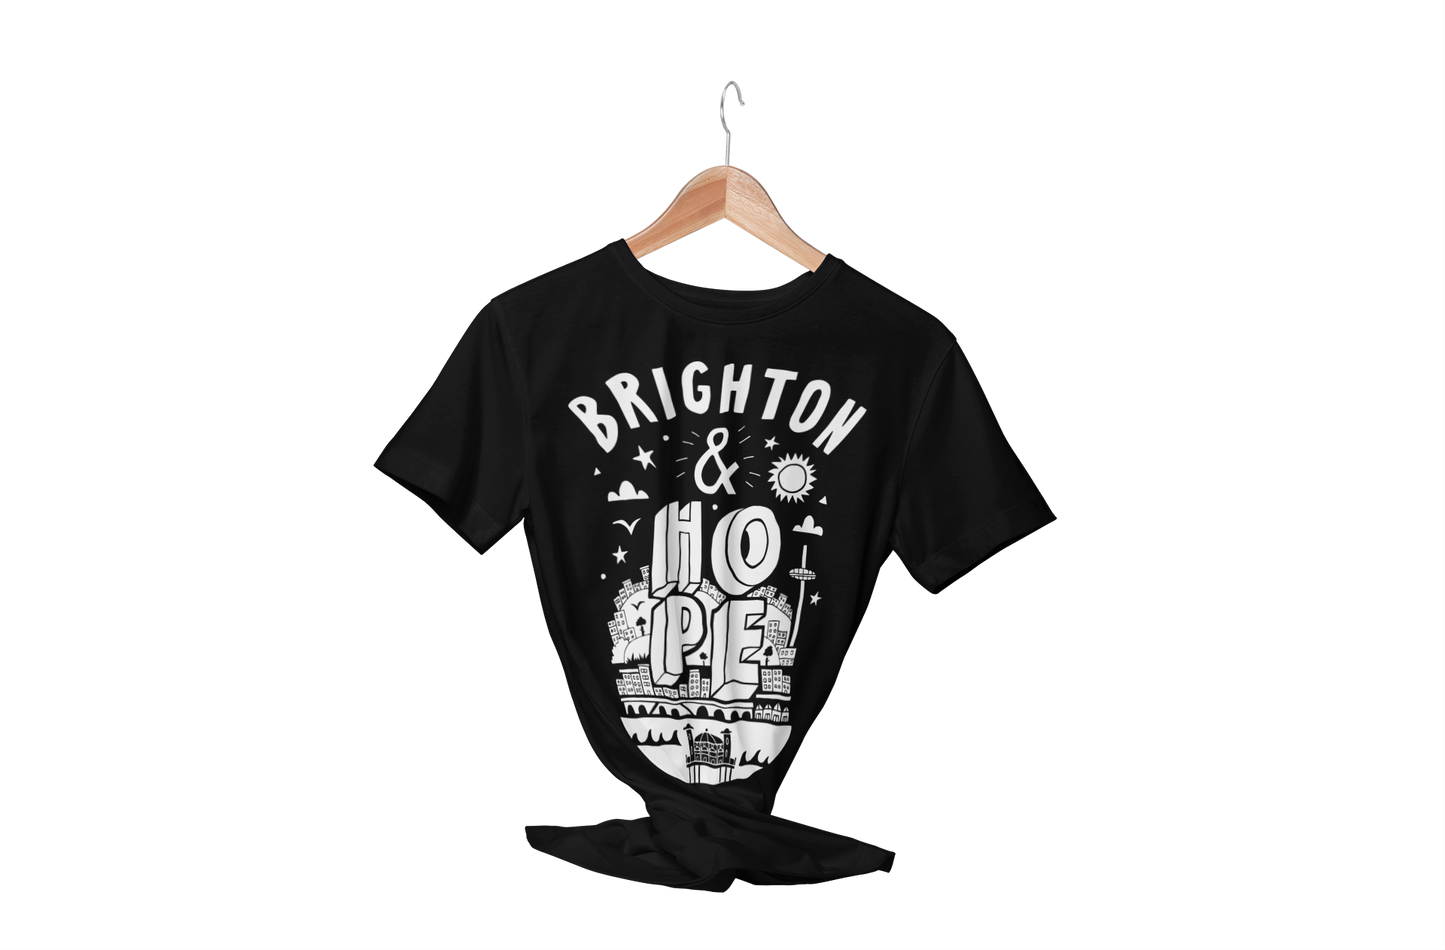 Brighton And Hope by Tom Barnard